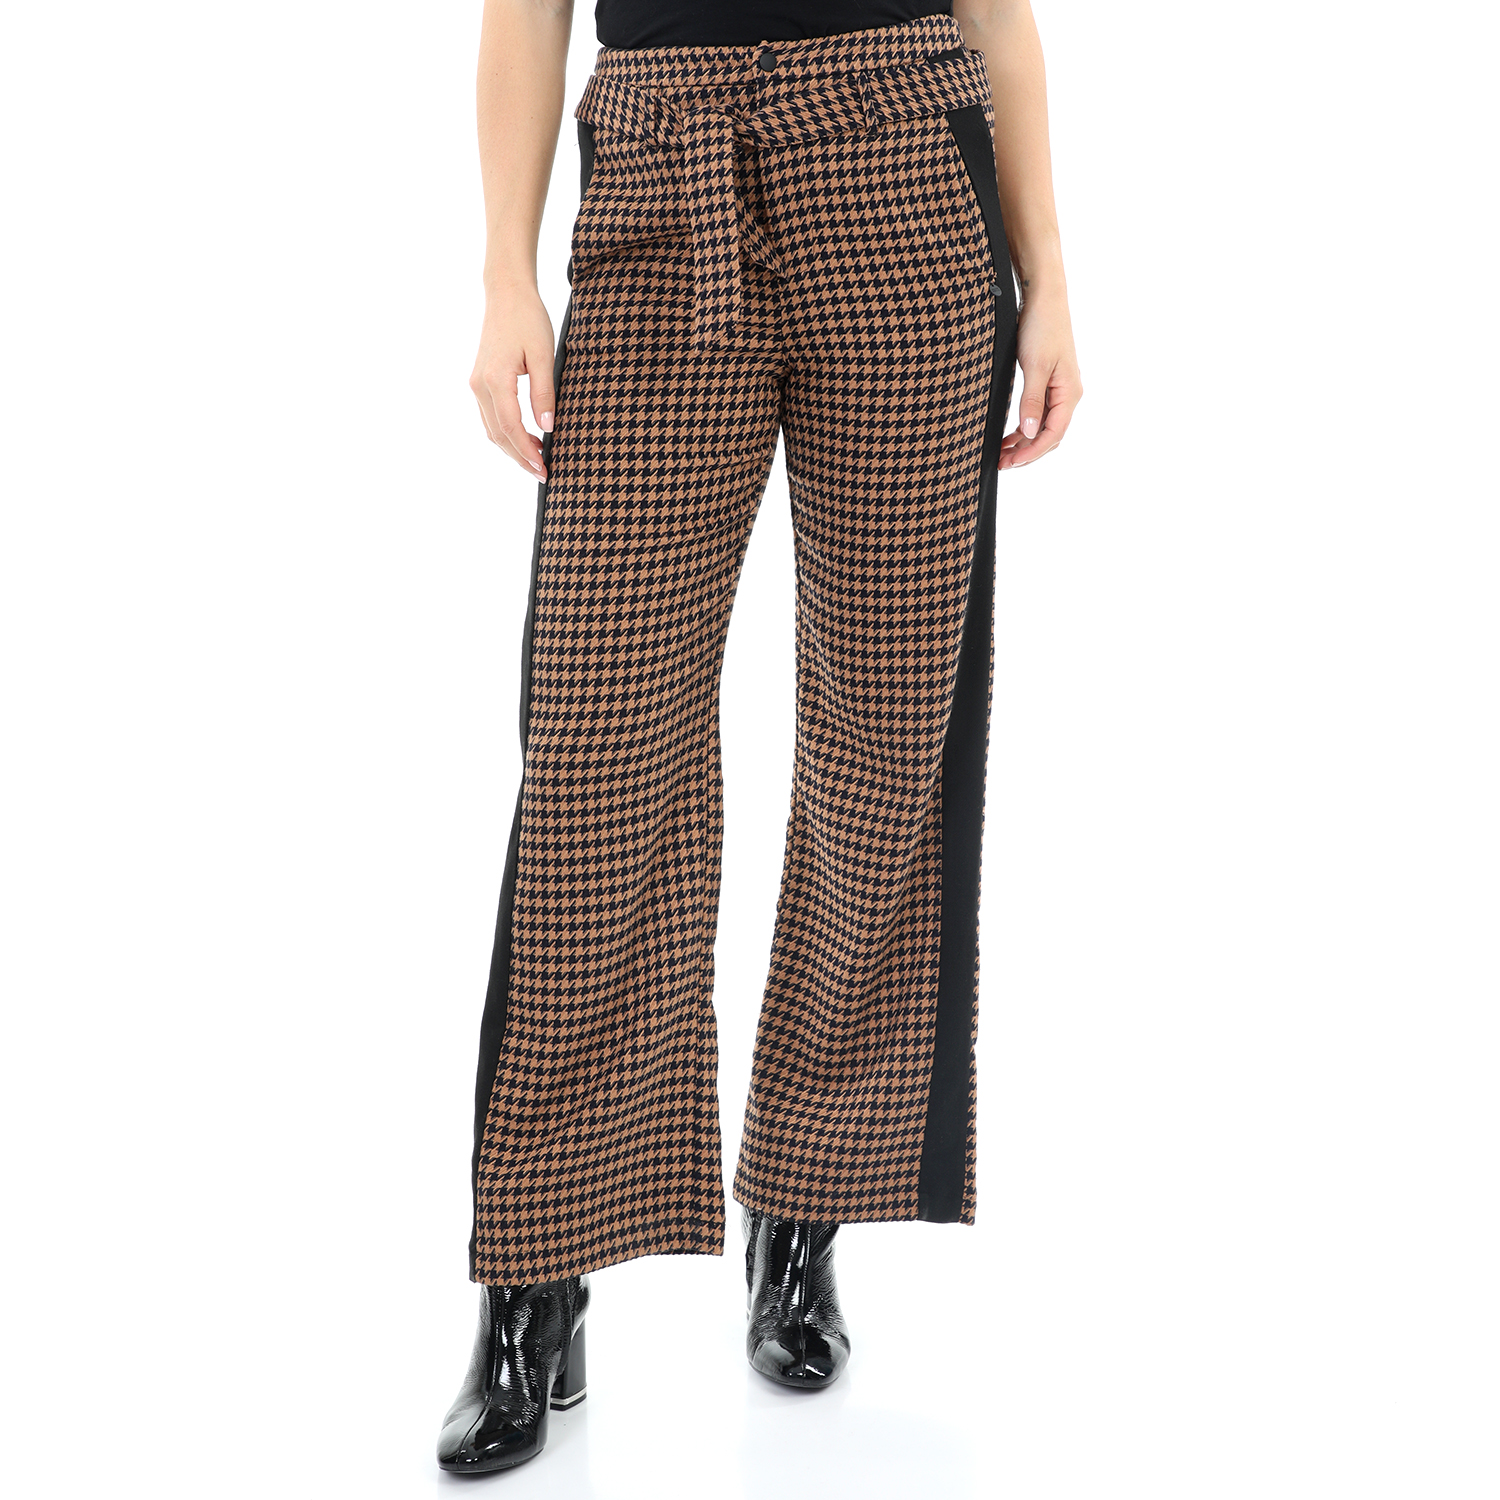 SCOTCH & SODA - Γυναικείο παντελόνι SCOTCH & SODA καφέ μαύρο Γυναικεία/Ρούχα/Παντελόνια/Ισια Γραμμή